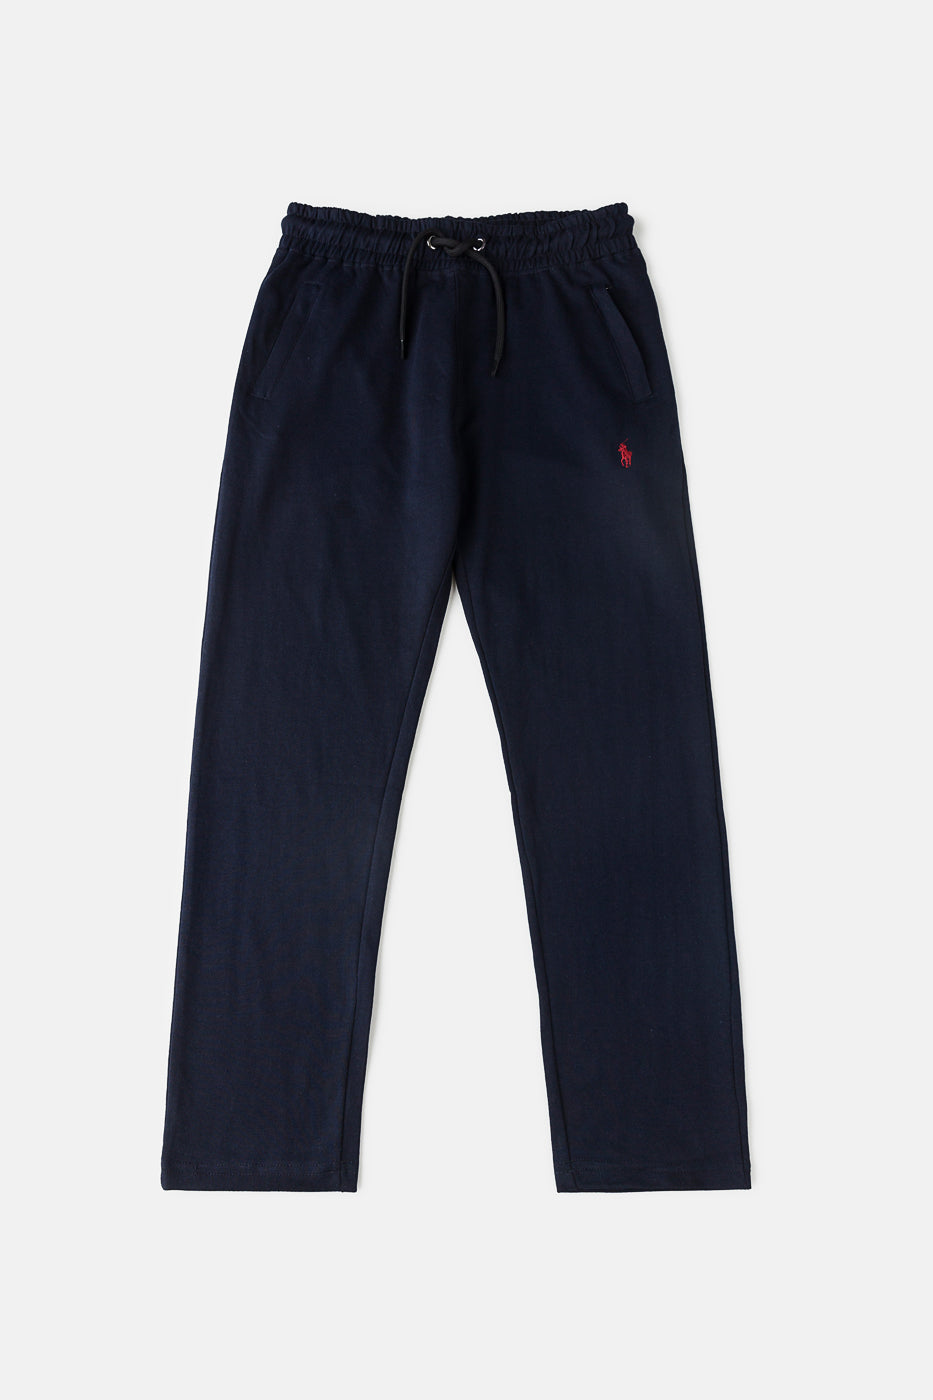 RL Premium Cotton Trouser – Navy Blue